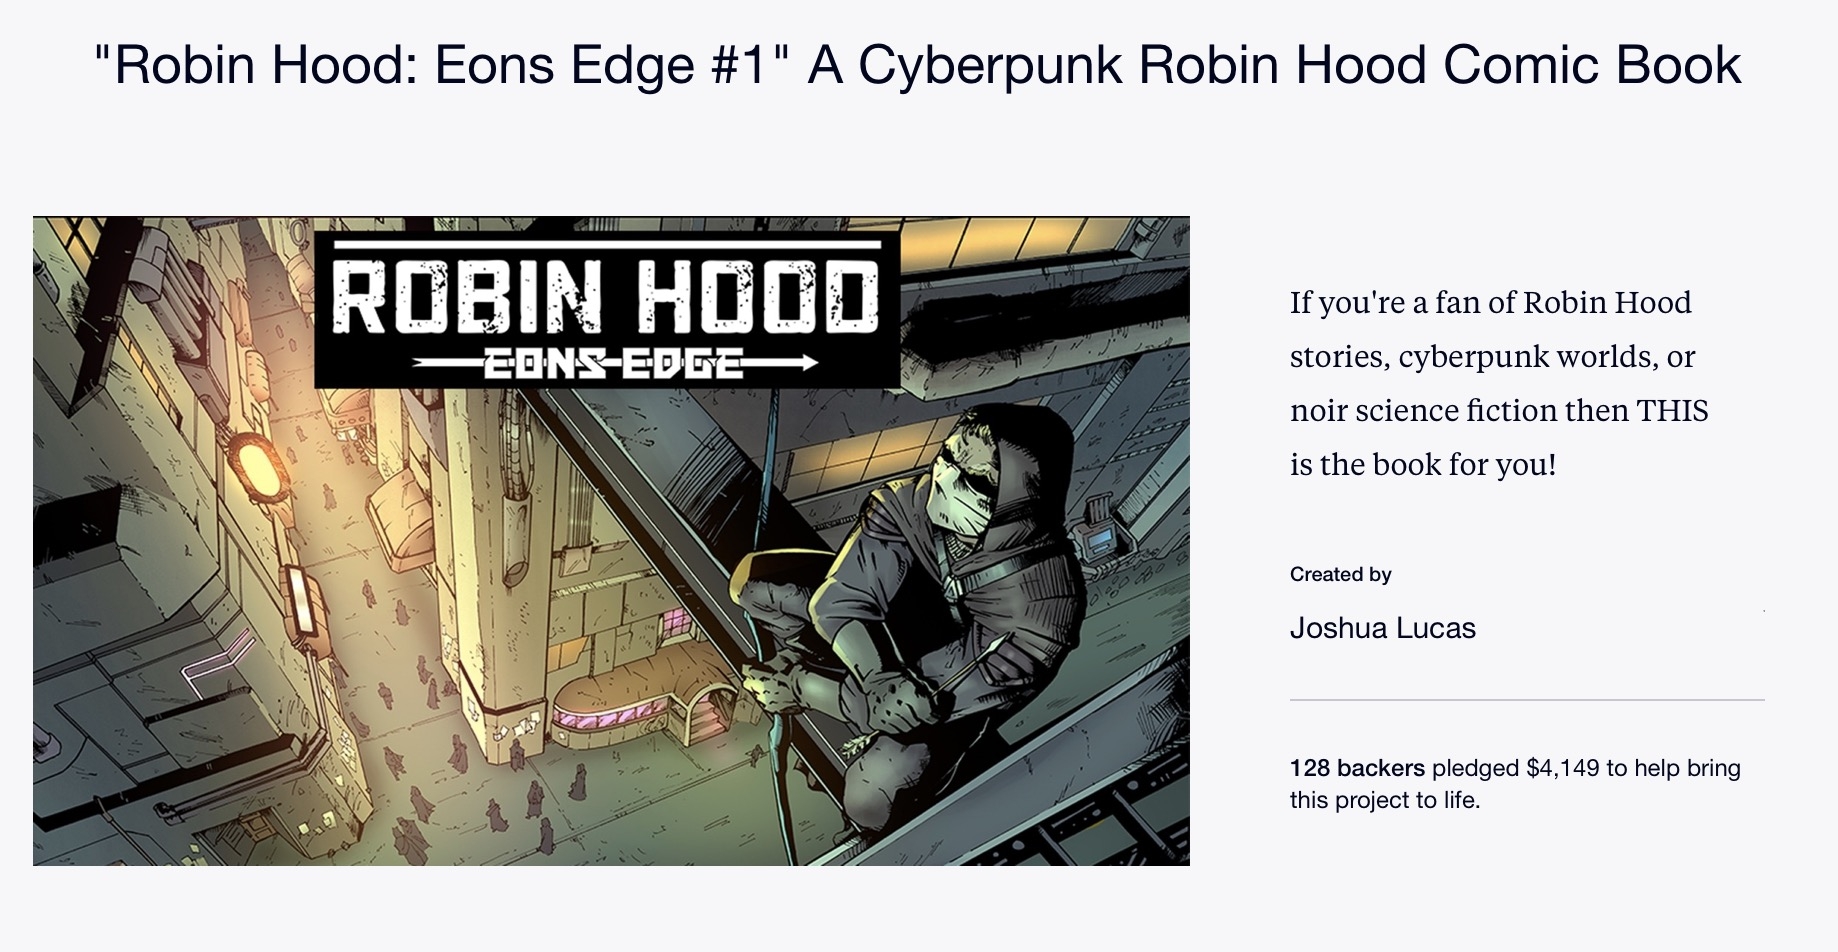 “Robin Hood: Eons Edge #1” A Cyberpunk Robin Hood Comic Book has launched off of Kickstarter